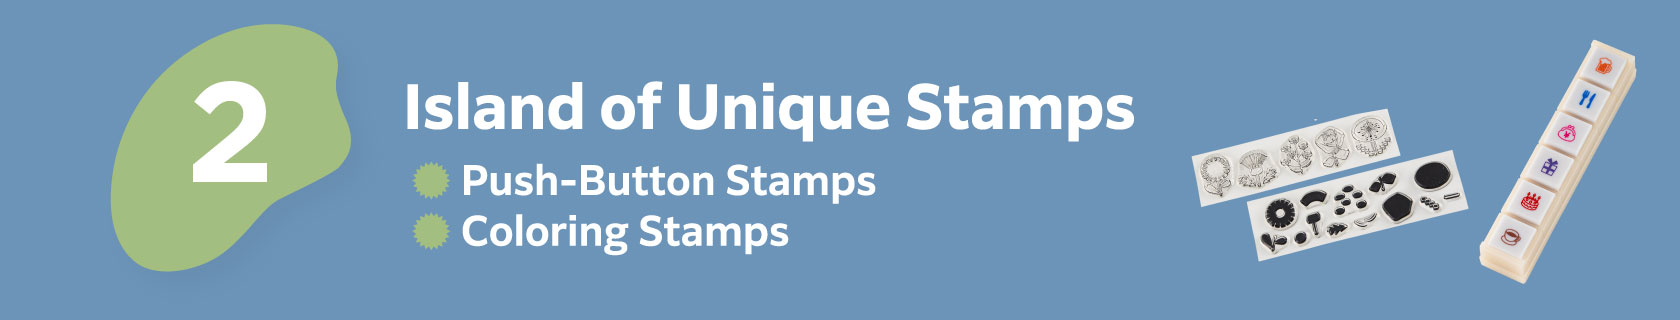 2 Island of Unique Stamps